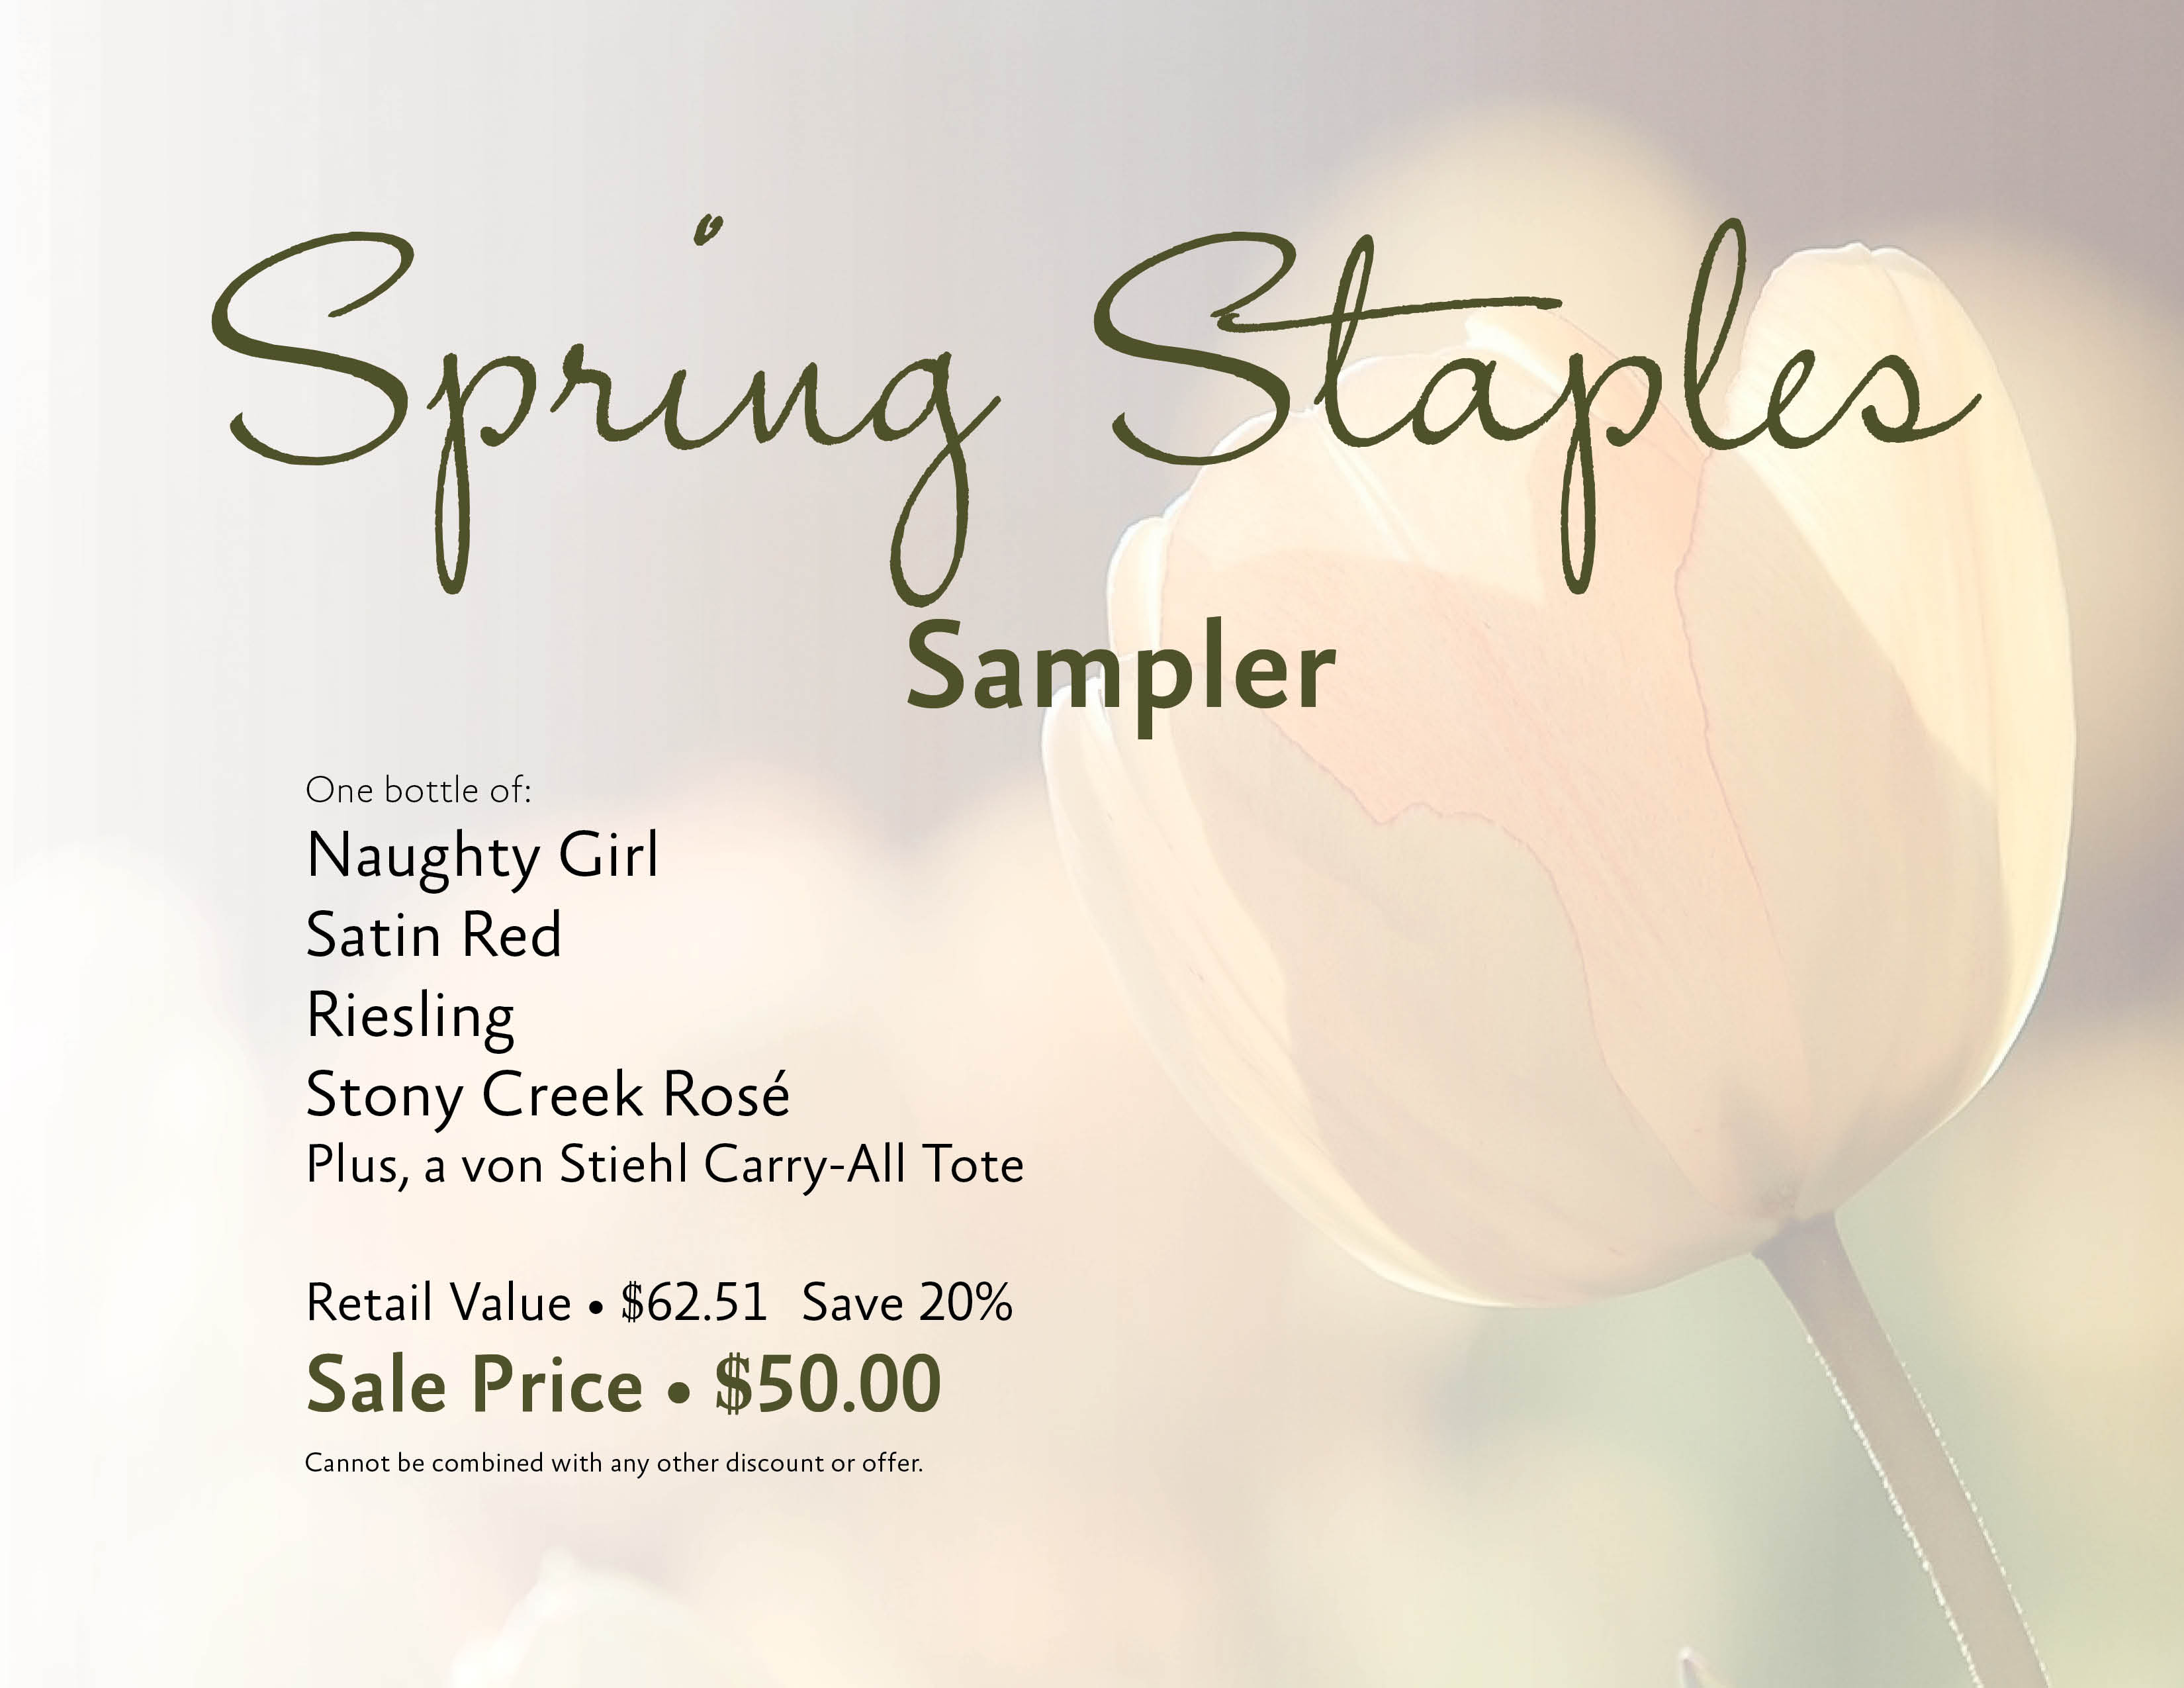 Spring Staples Sampler Product Photo